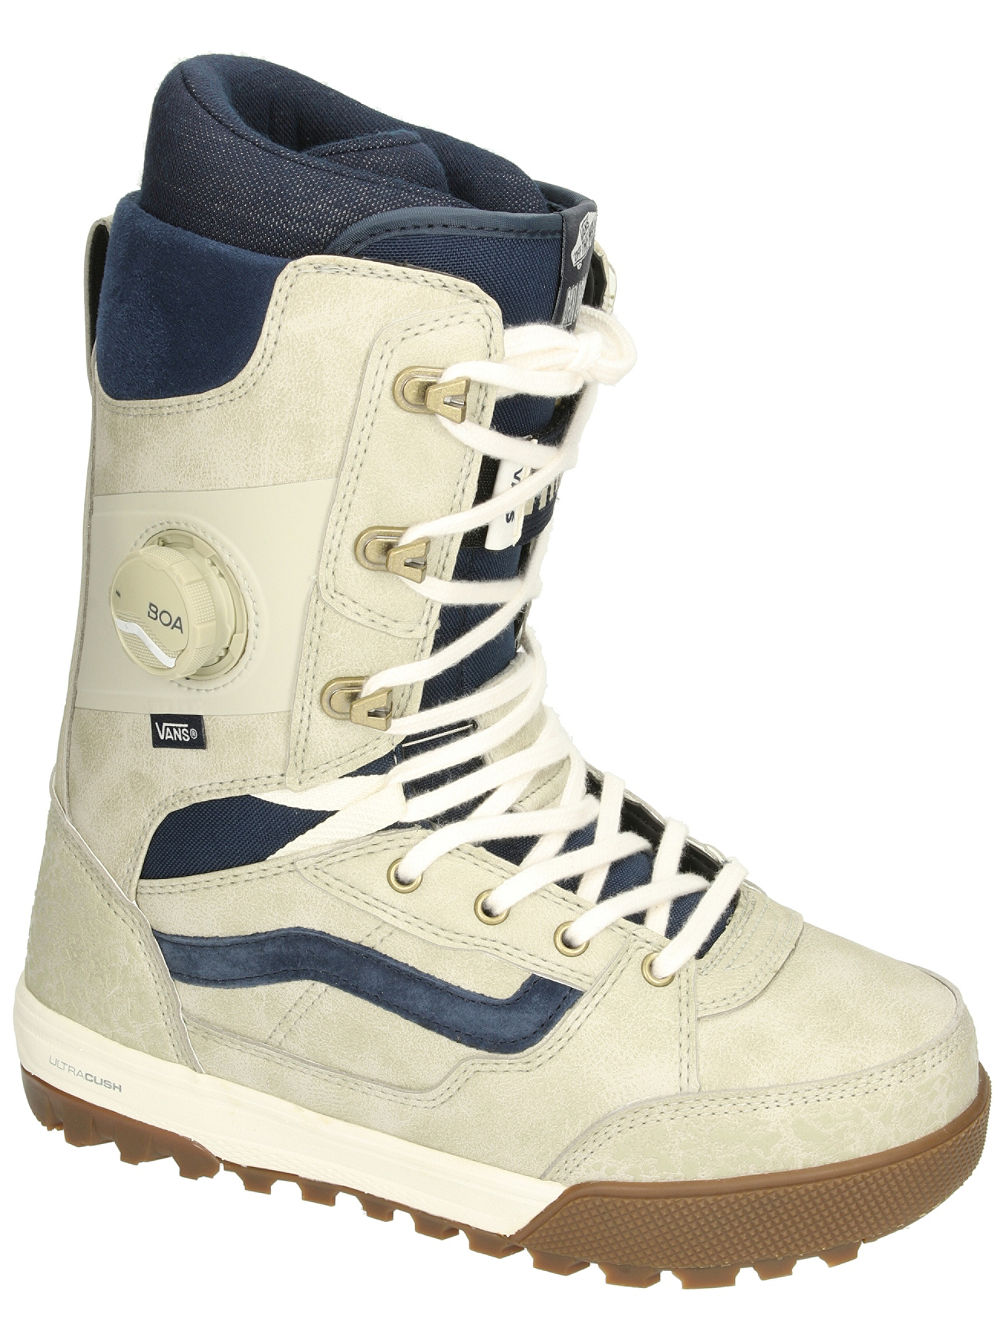 Invado Pro 2024 Snowboard Boots